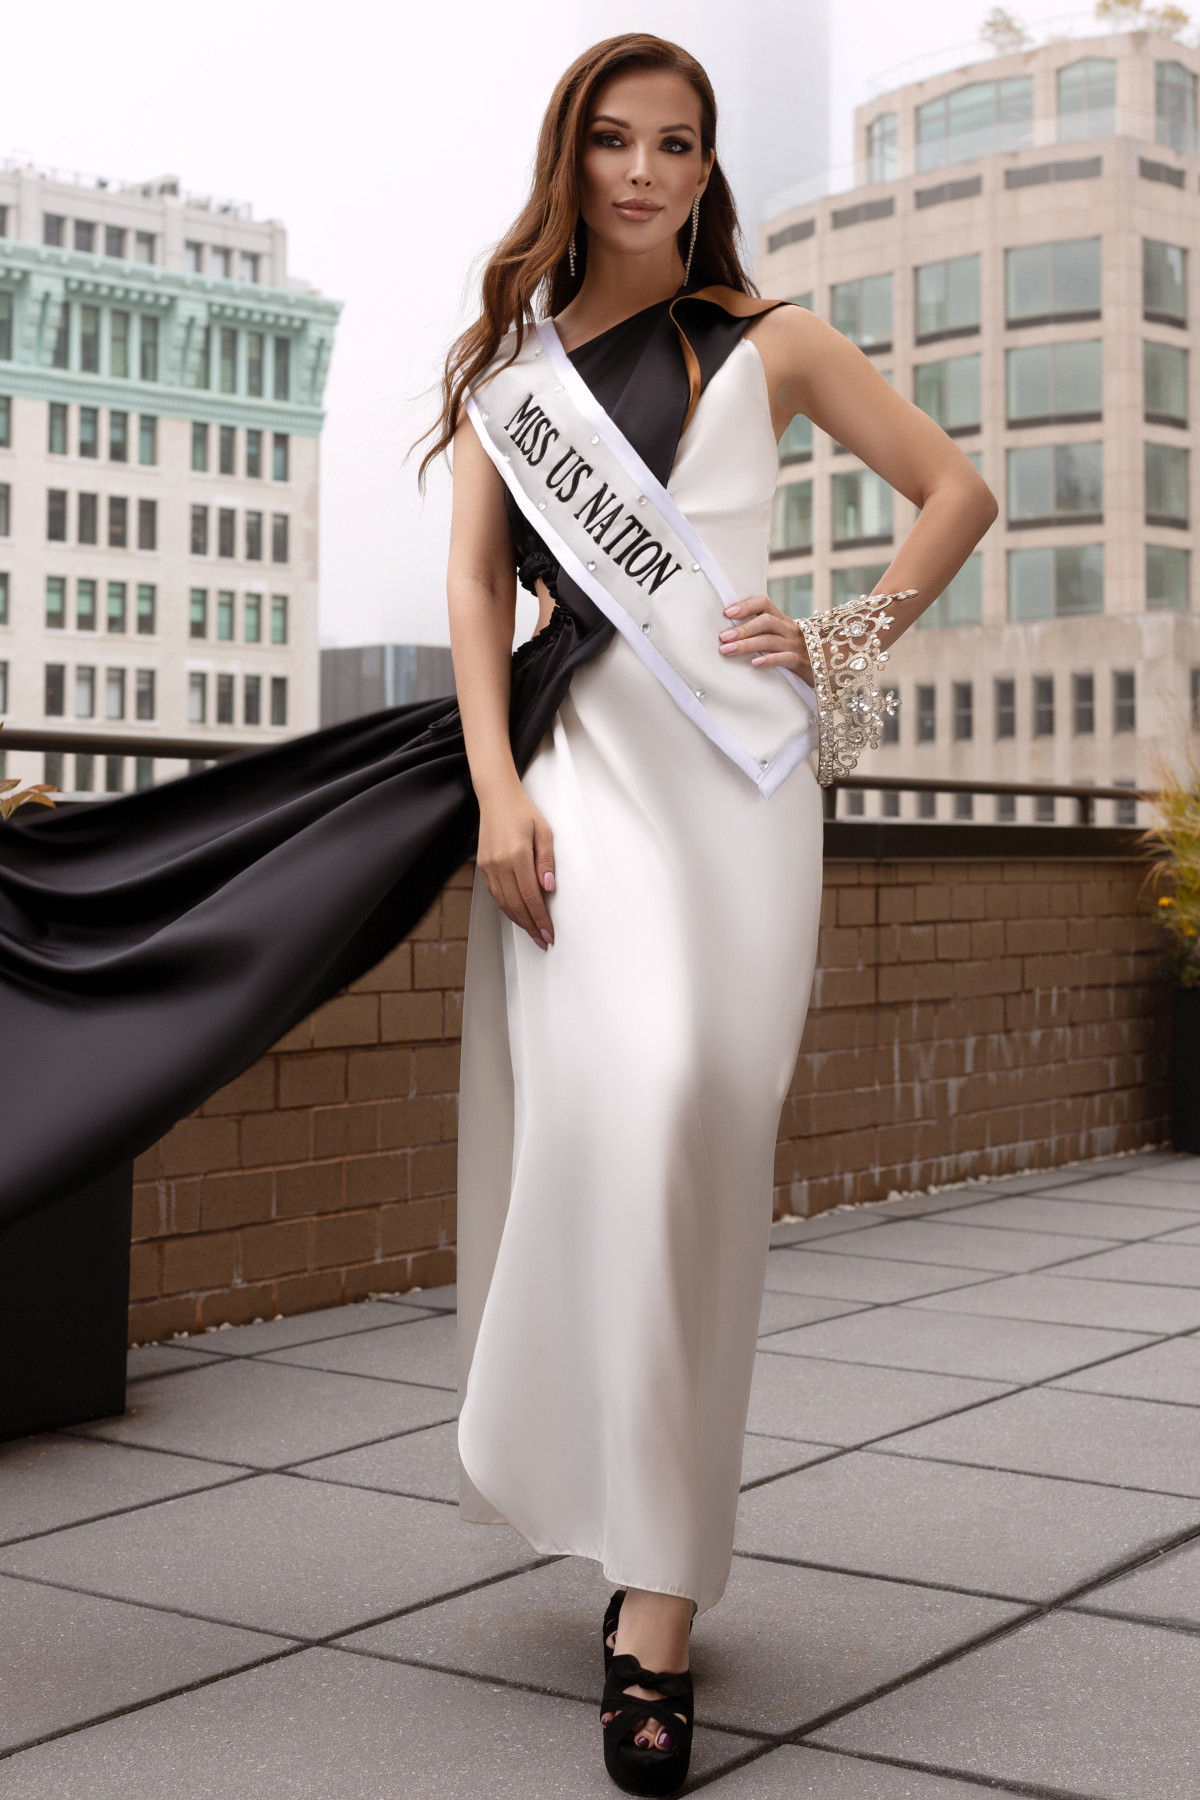 Miss US Nation Ірина Григоренко